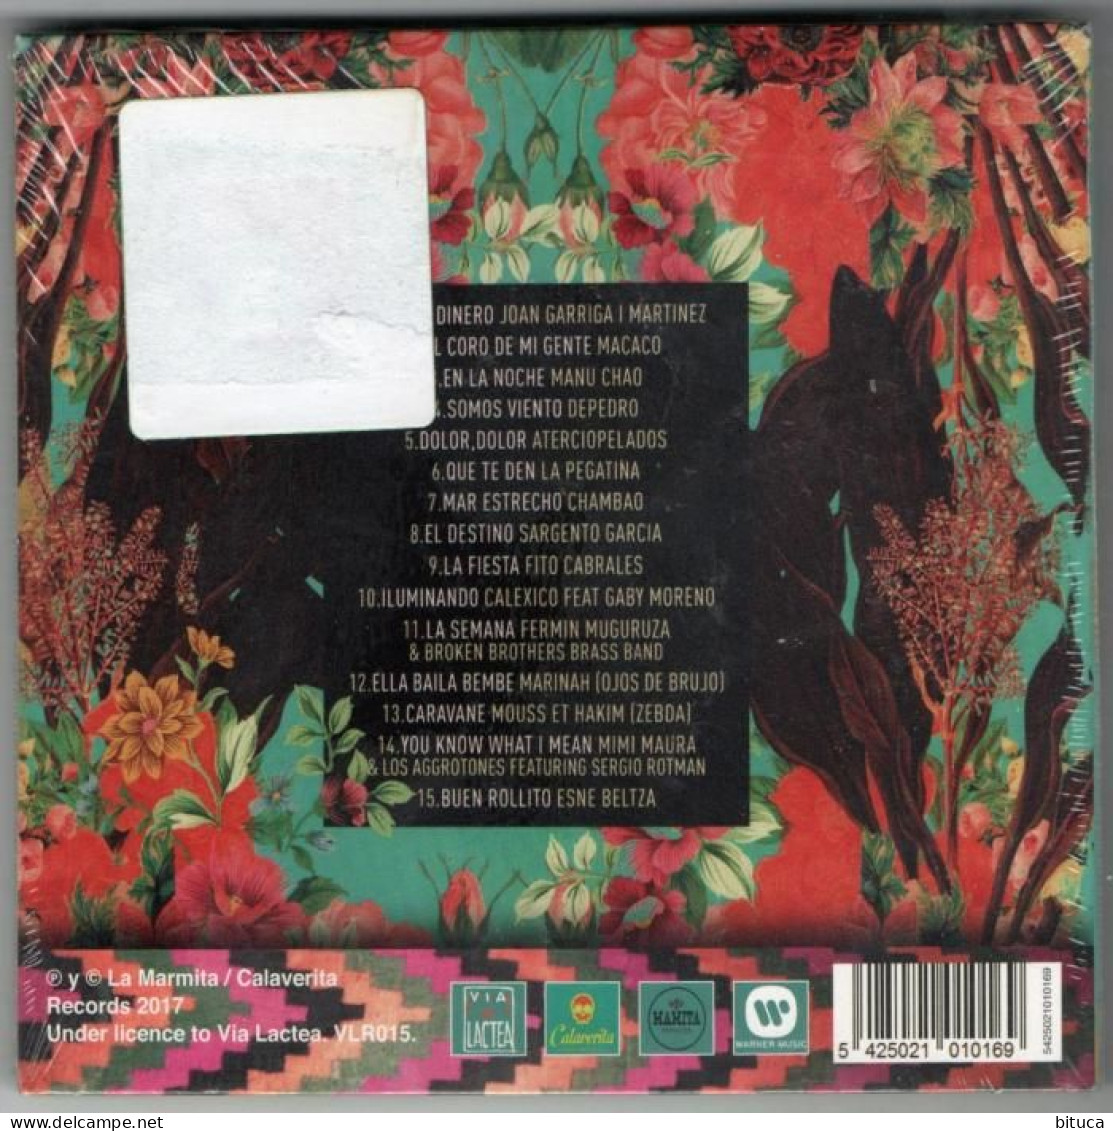 CD Neuf Sous Blister 15 Titres Amparanoia - El Coro De Mi Gente - Reggae